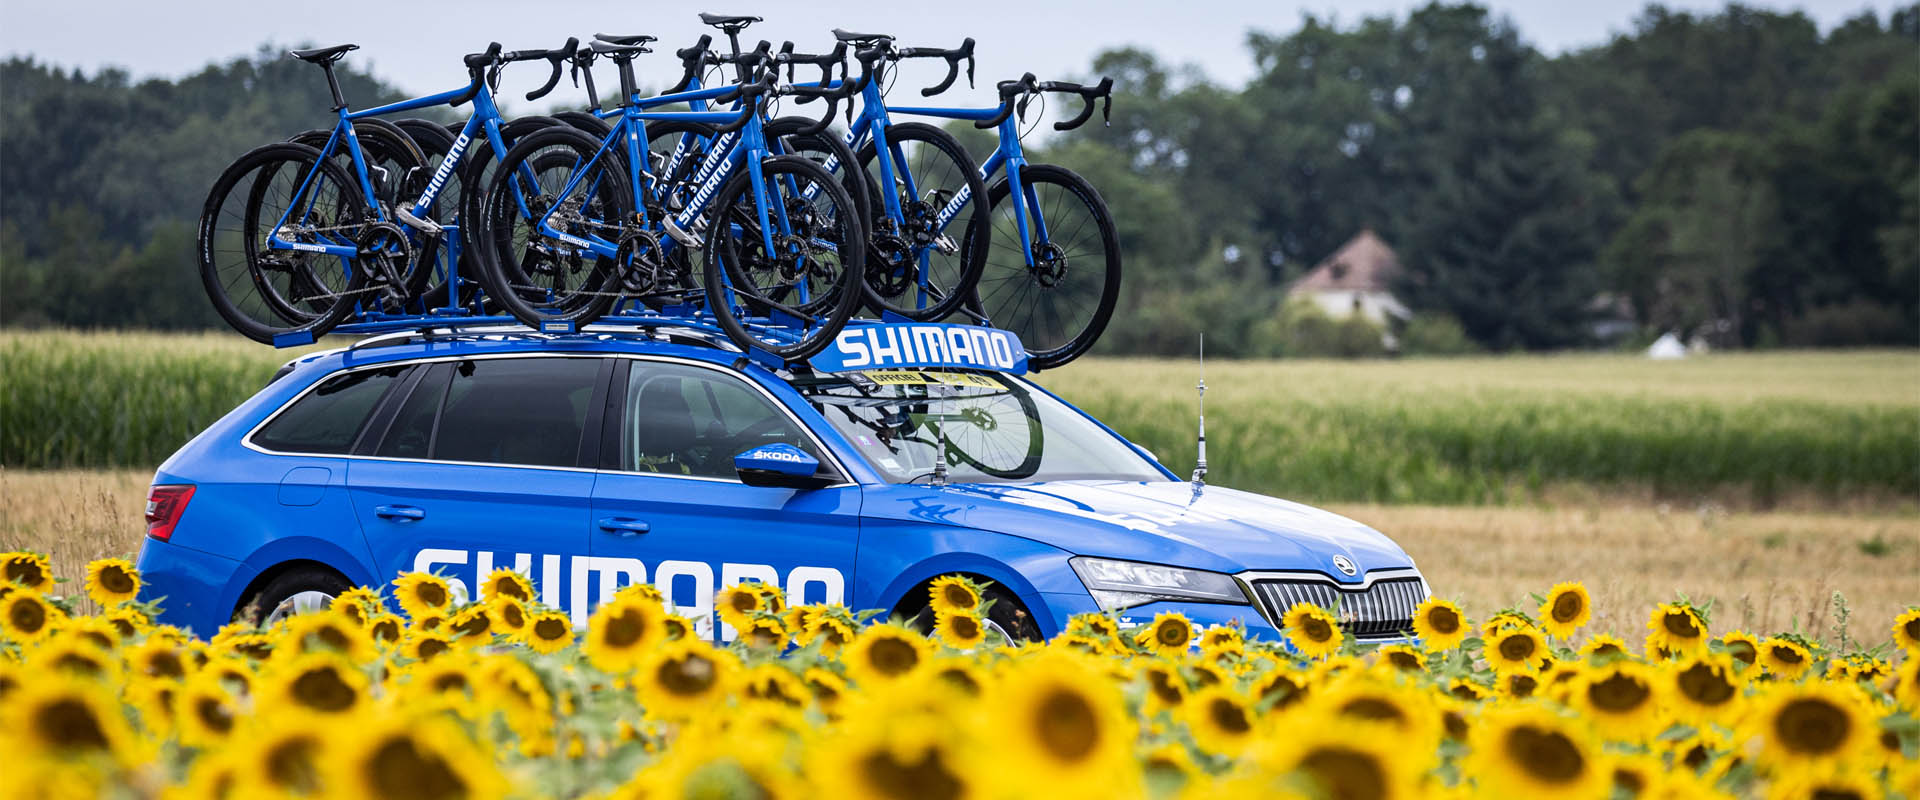 Shimano Builds Toward the Tour de France